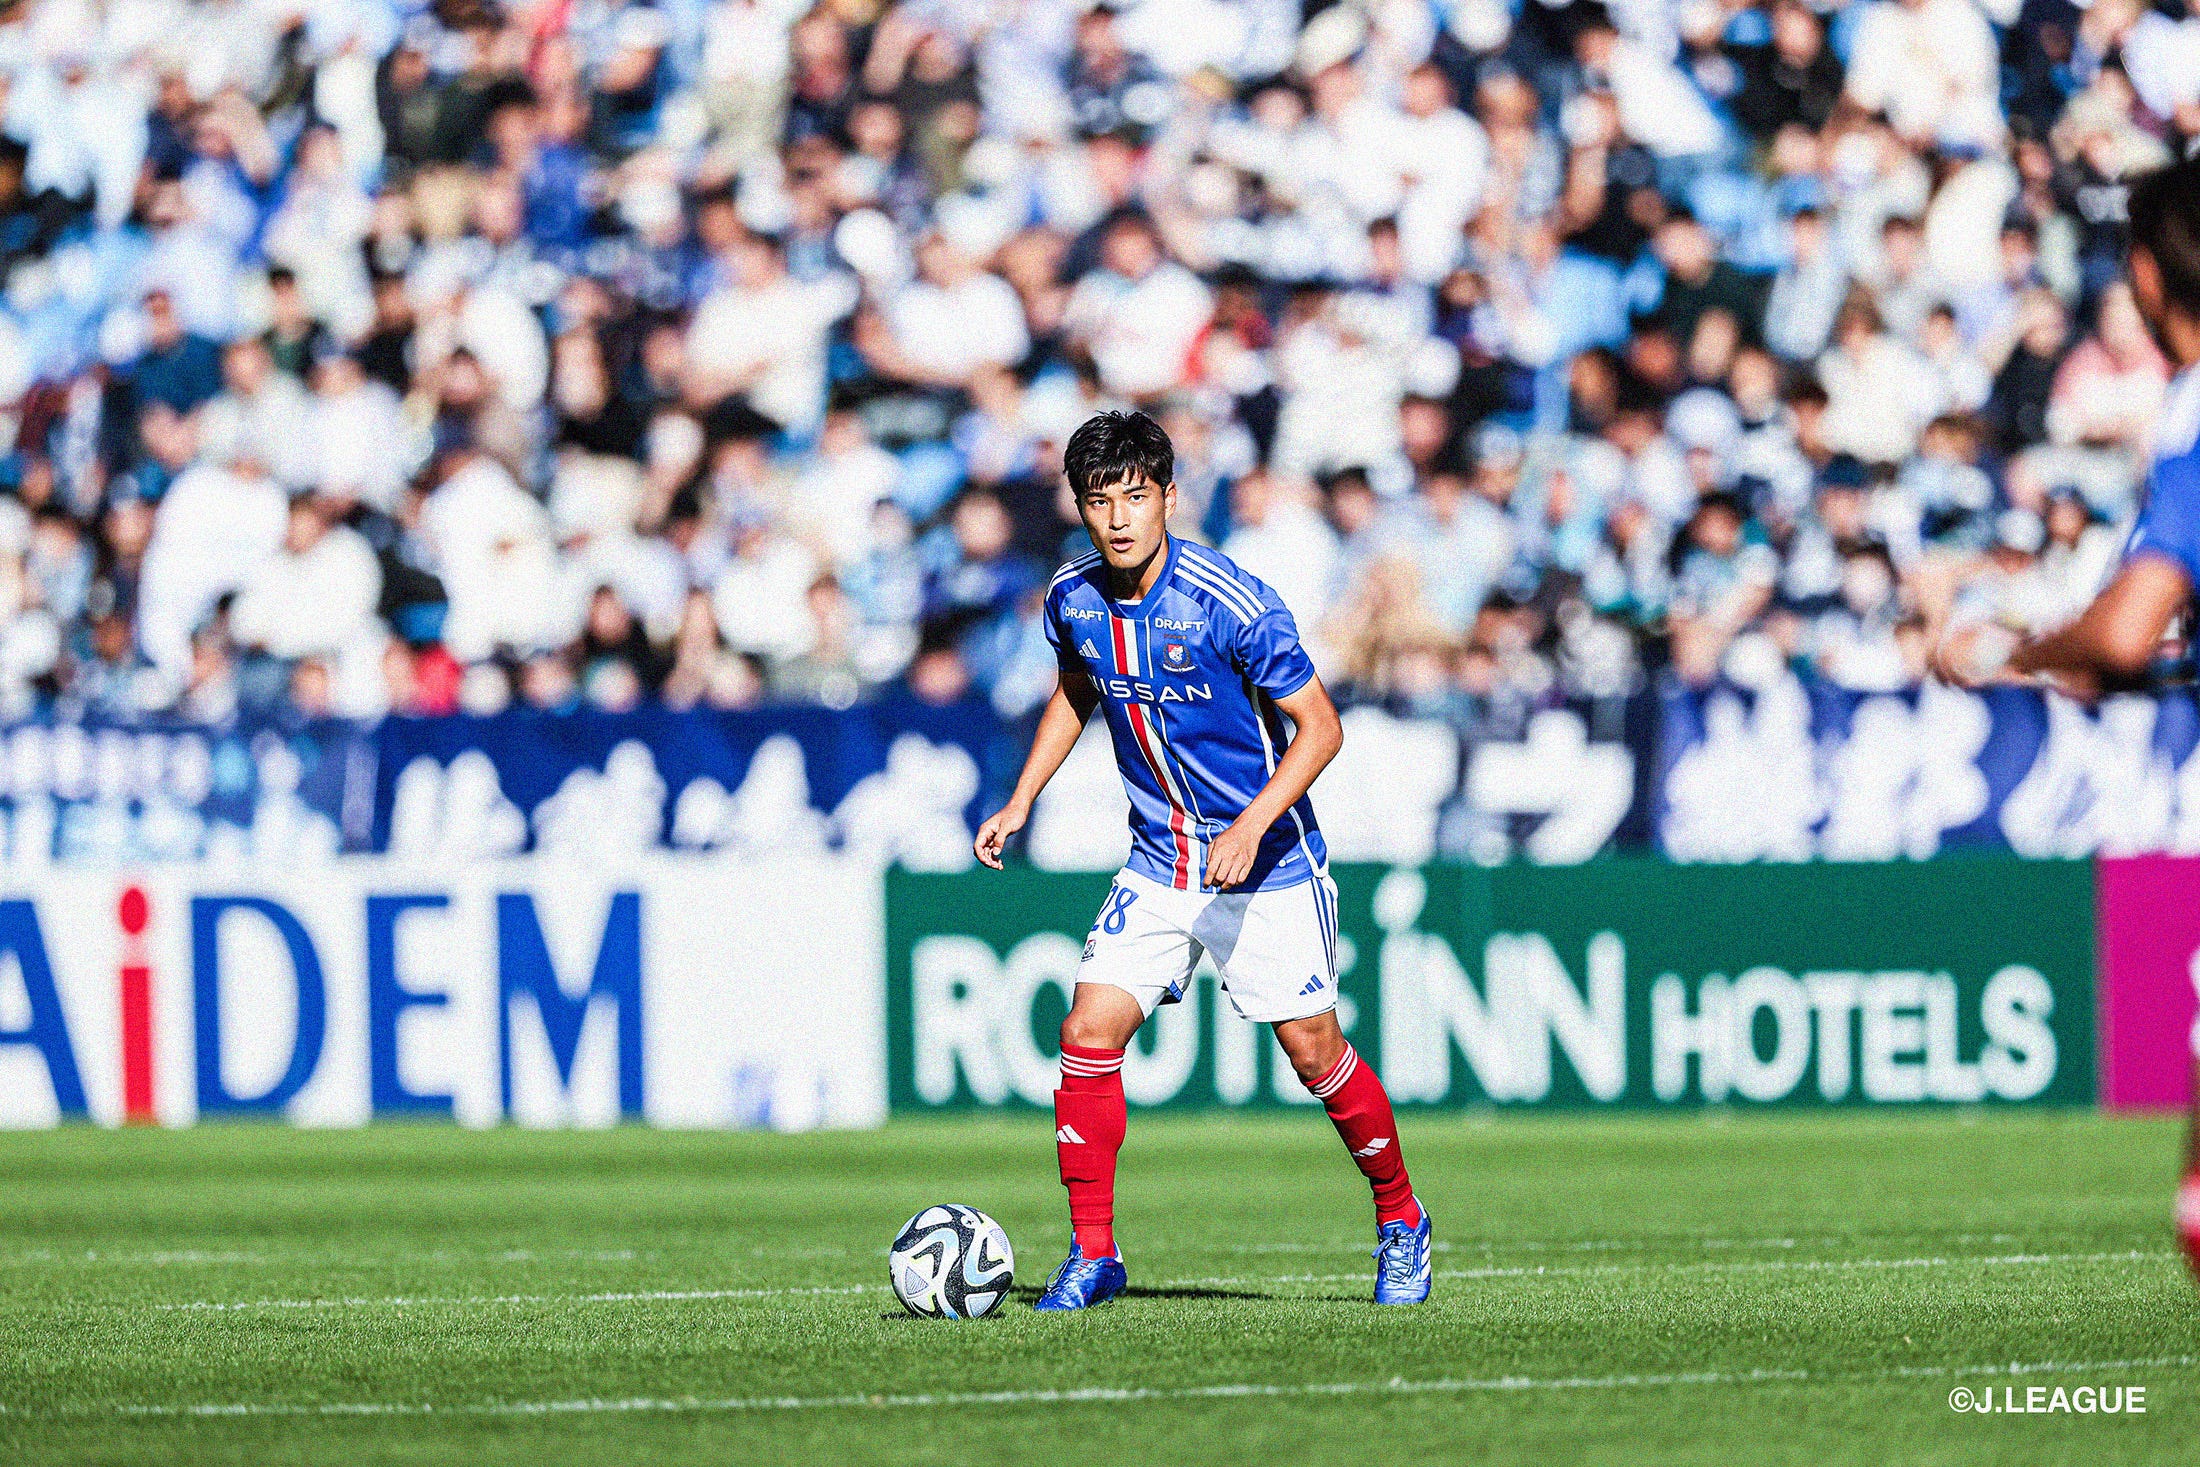 A photo of Yokohama F. Marinos' Riky Yamane stood over the ball.